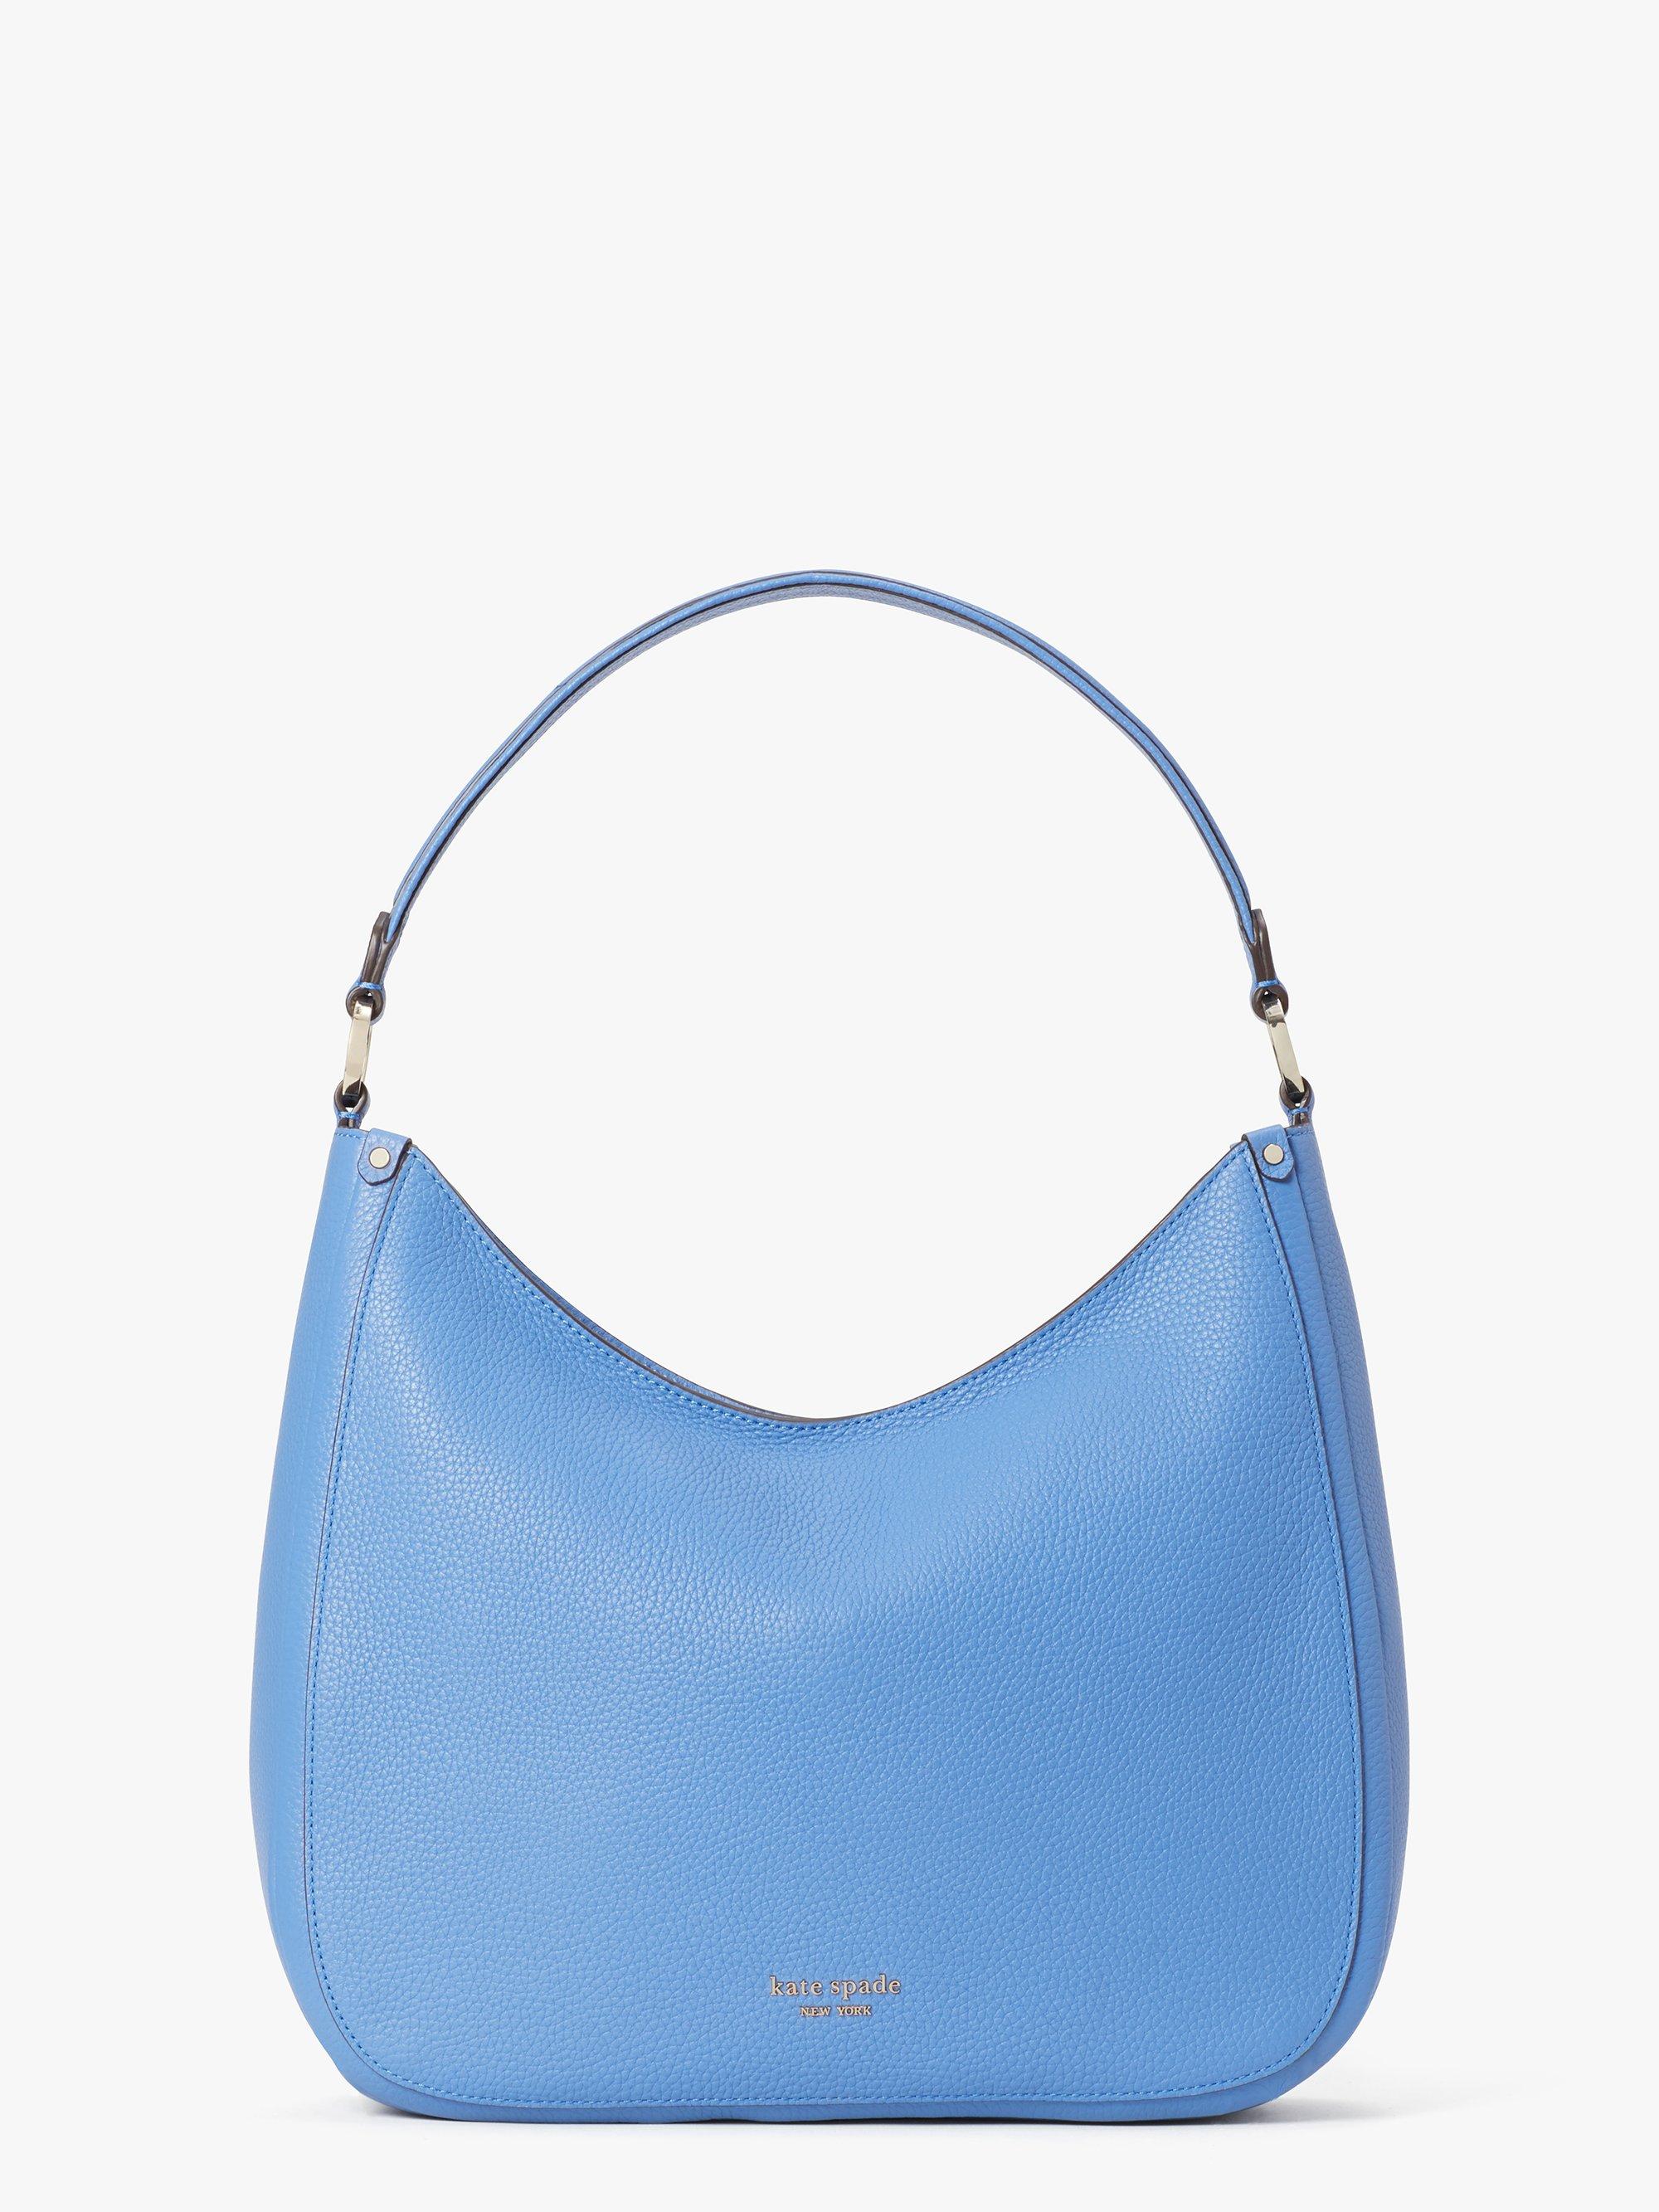 Kate Spade Leather Roulette Large Hobo Bag in Deep Cornflower (Blue) - Lyst